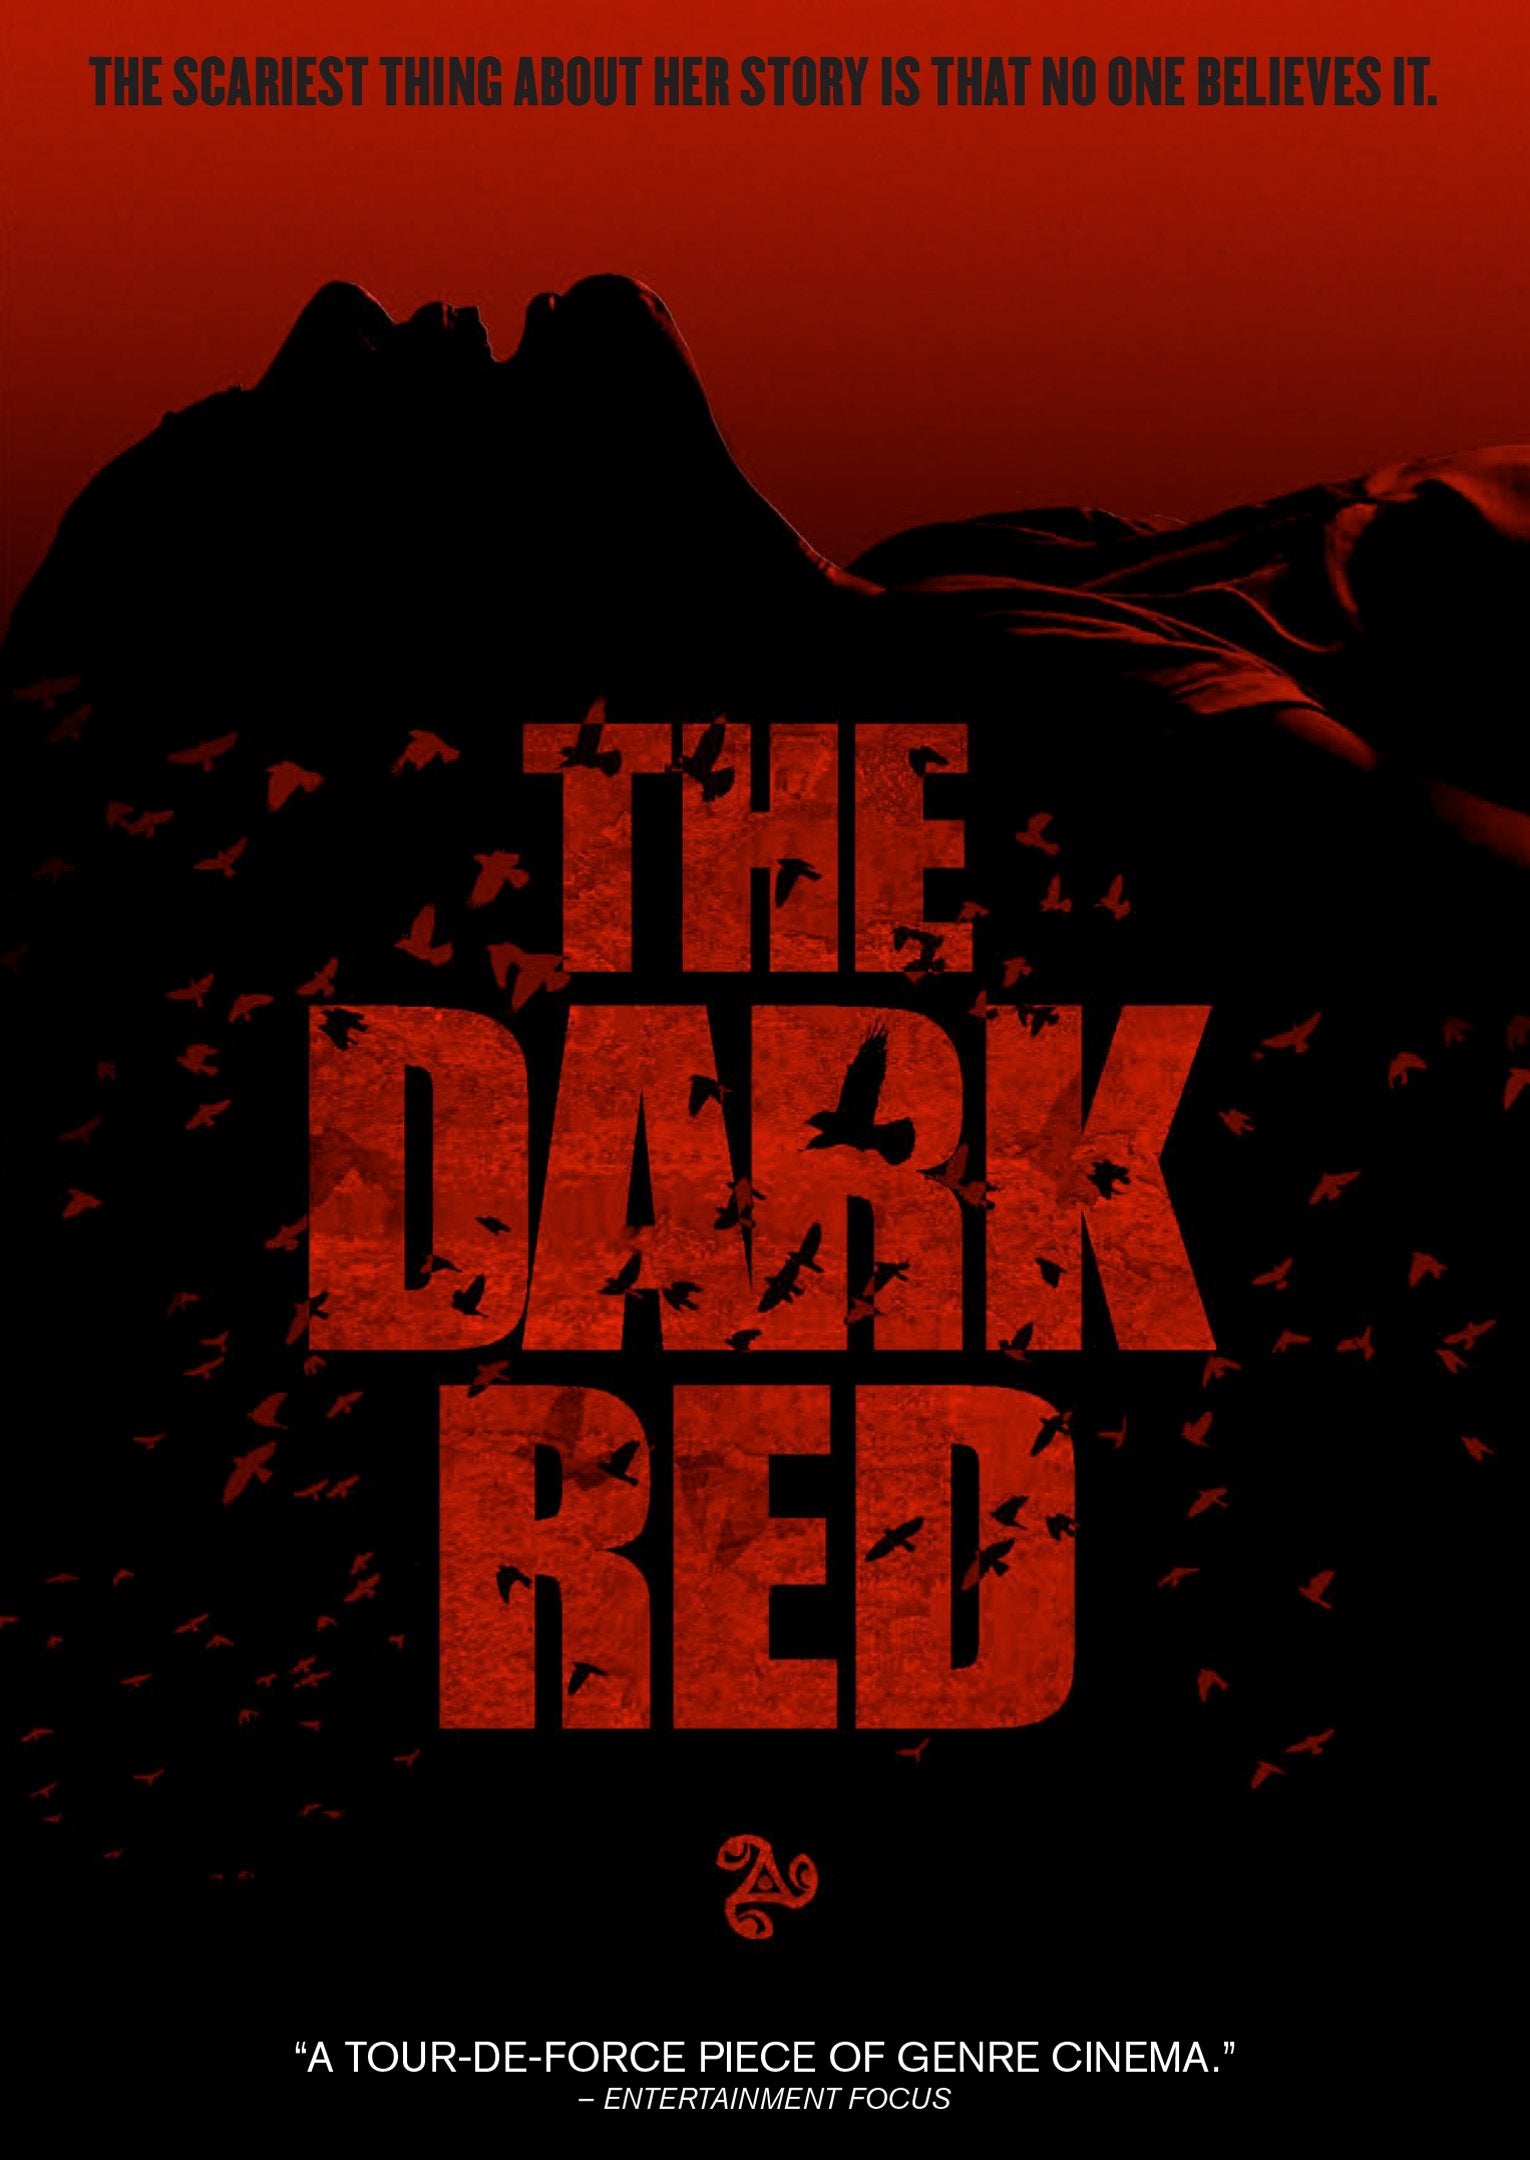 Dark Red cover art